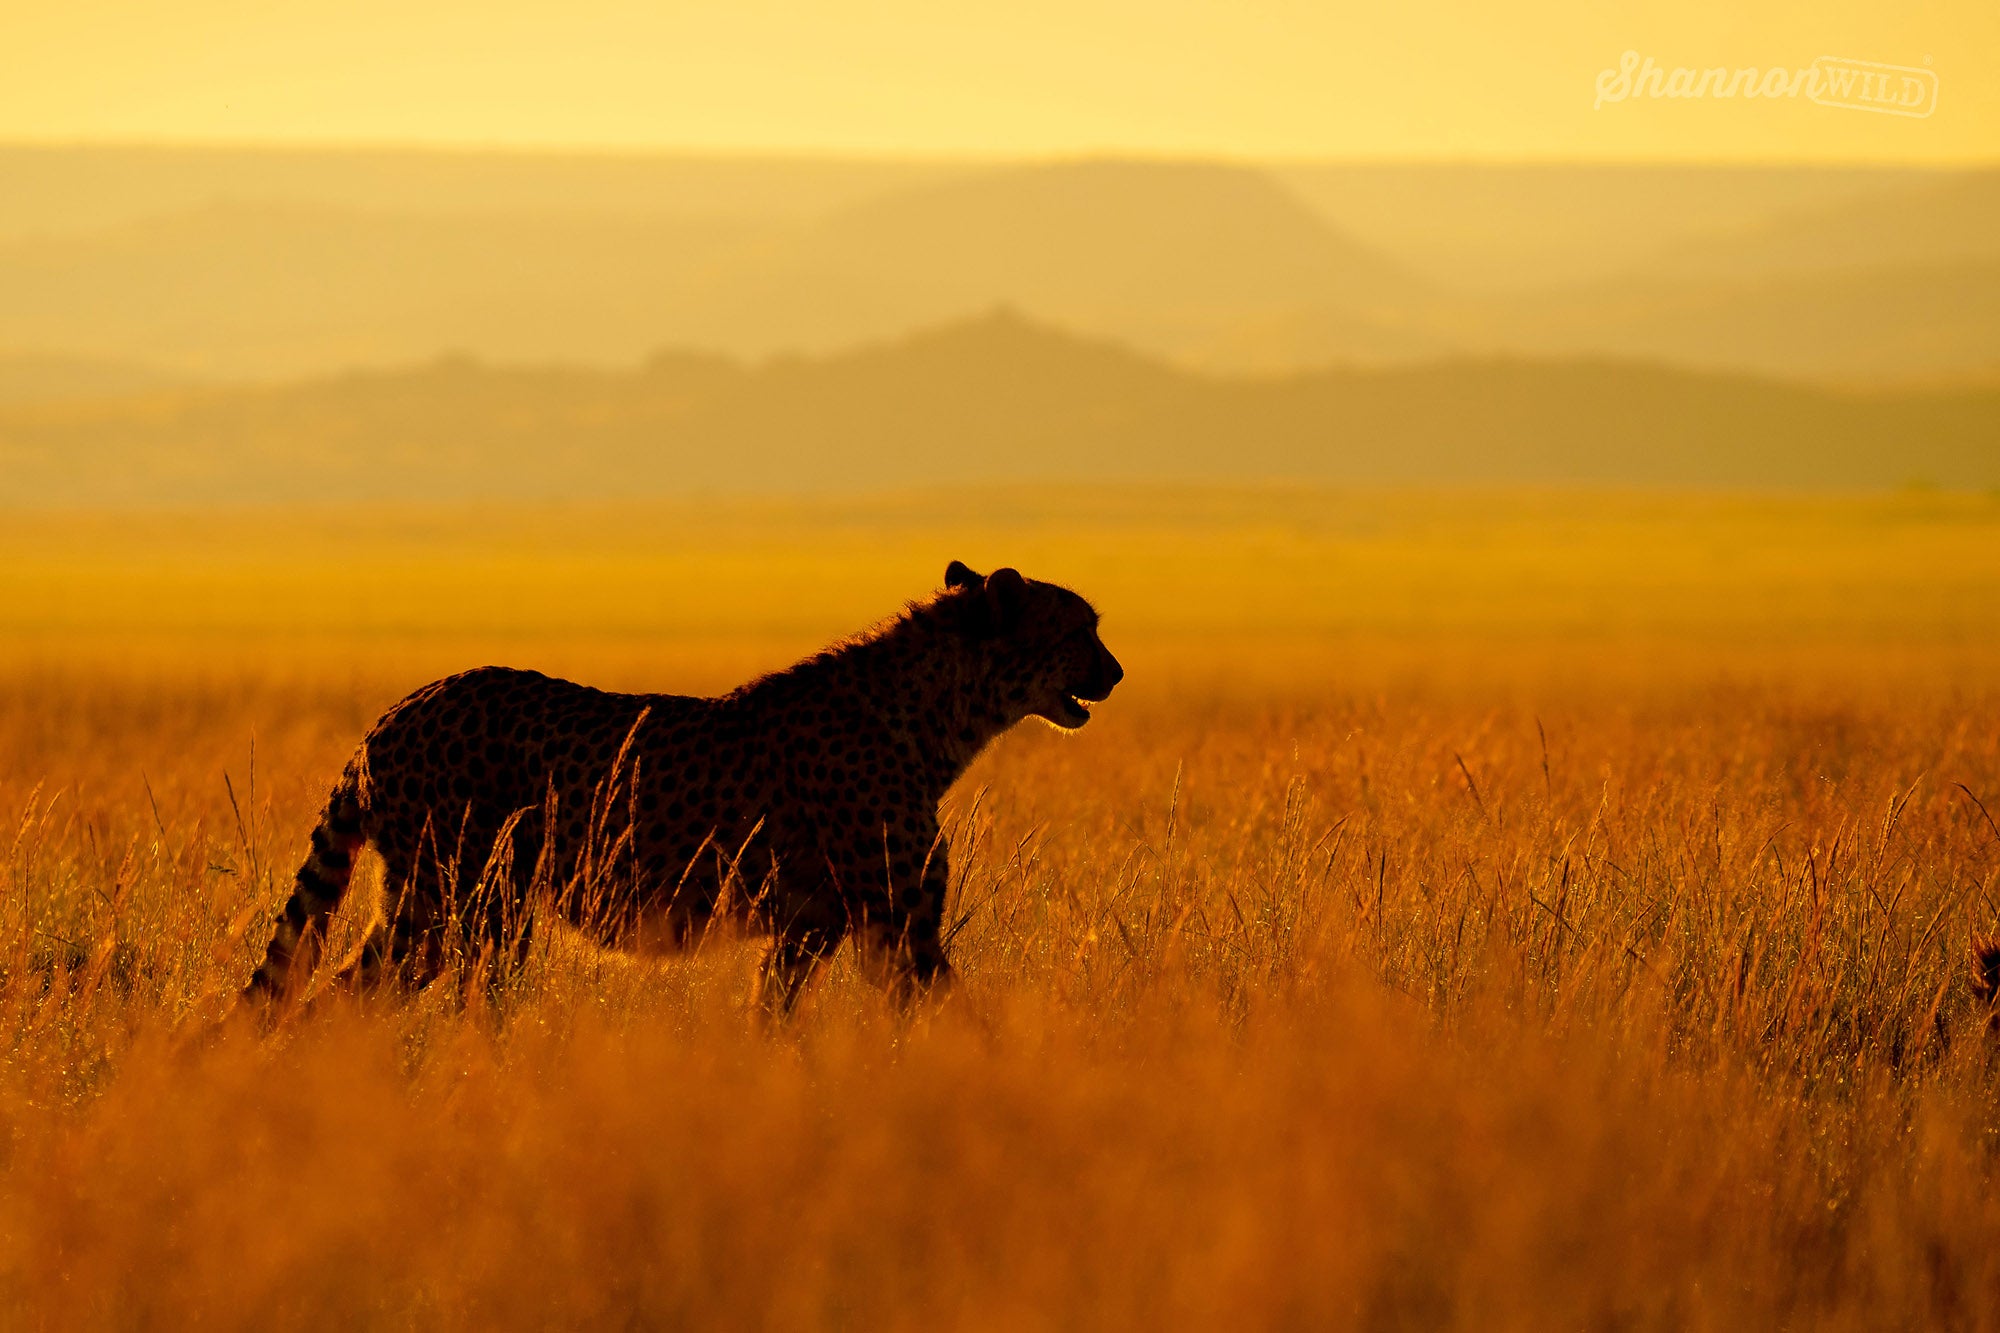 Cheetah silhouette photo by Shannon Wild